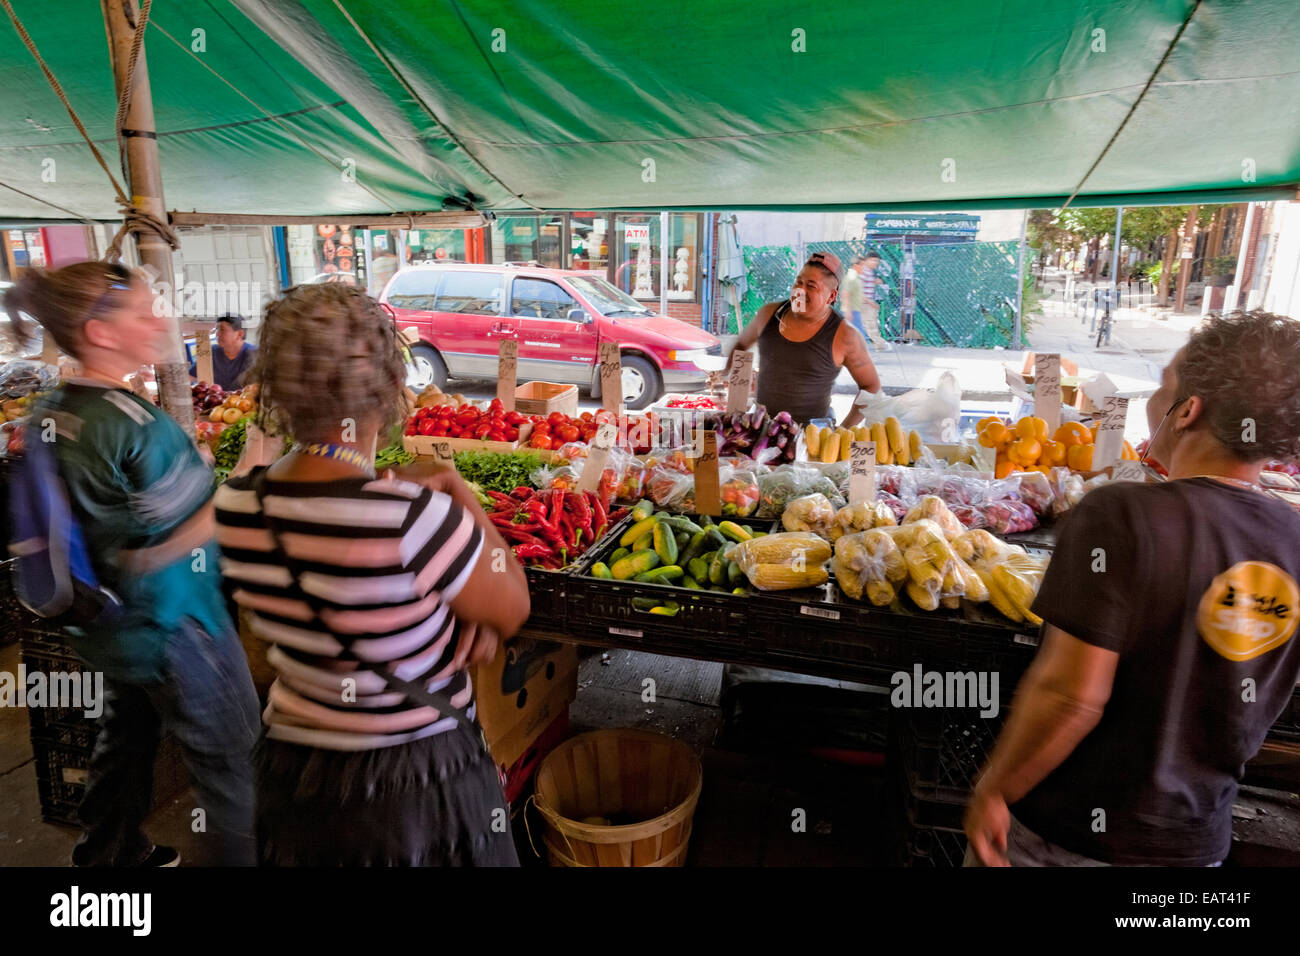 The Italian Market - 9th Street, Philadelphia, PA Stock Photo